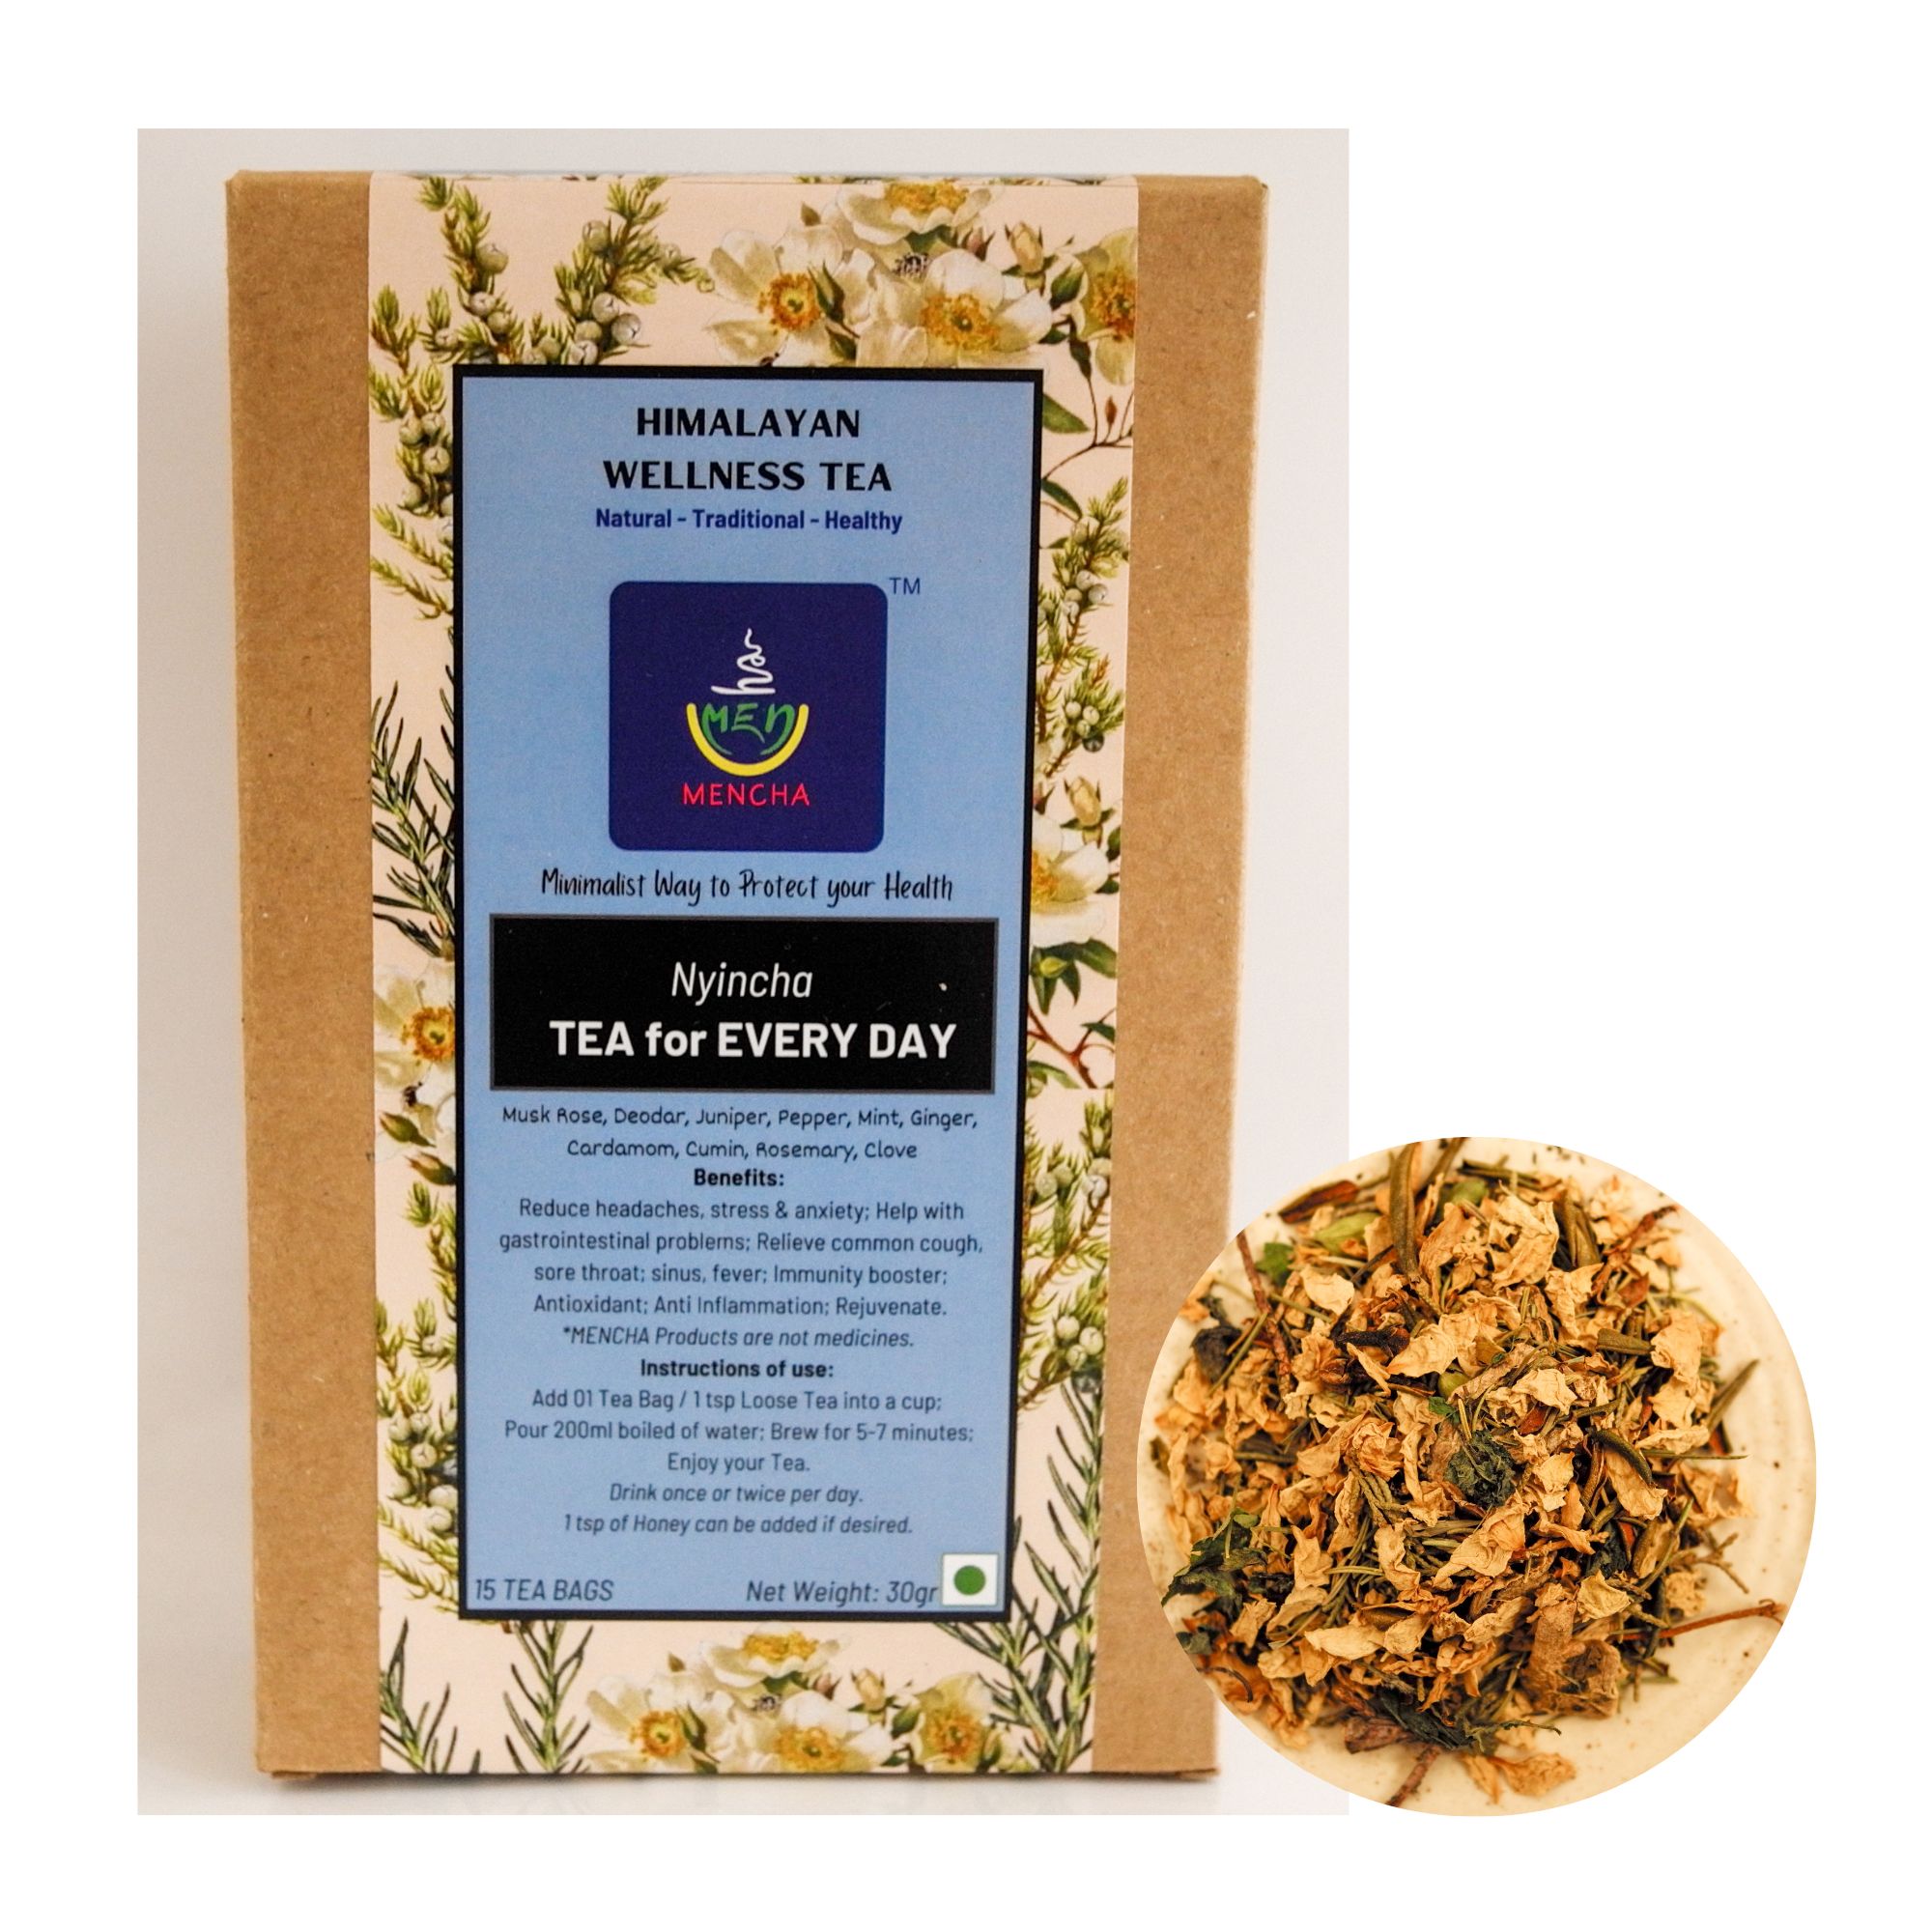 MENCHA - Immunity Tea - Handmade - Caffeine Free - Himalayan Herbs for Immunity Booster, Relaxation, Rejuvenate, Antioxidant - 15 Tea Bags